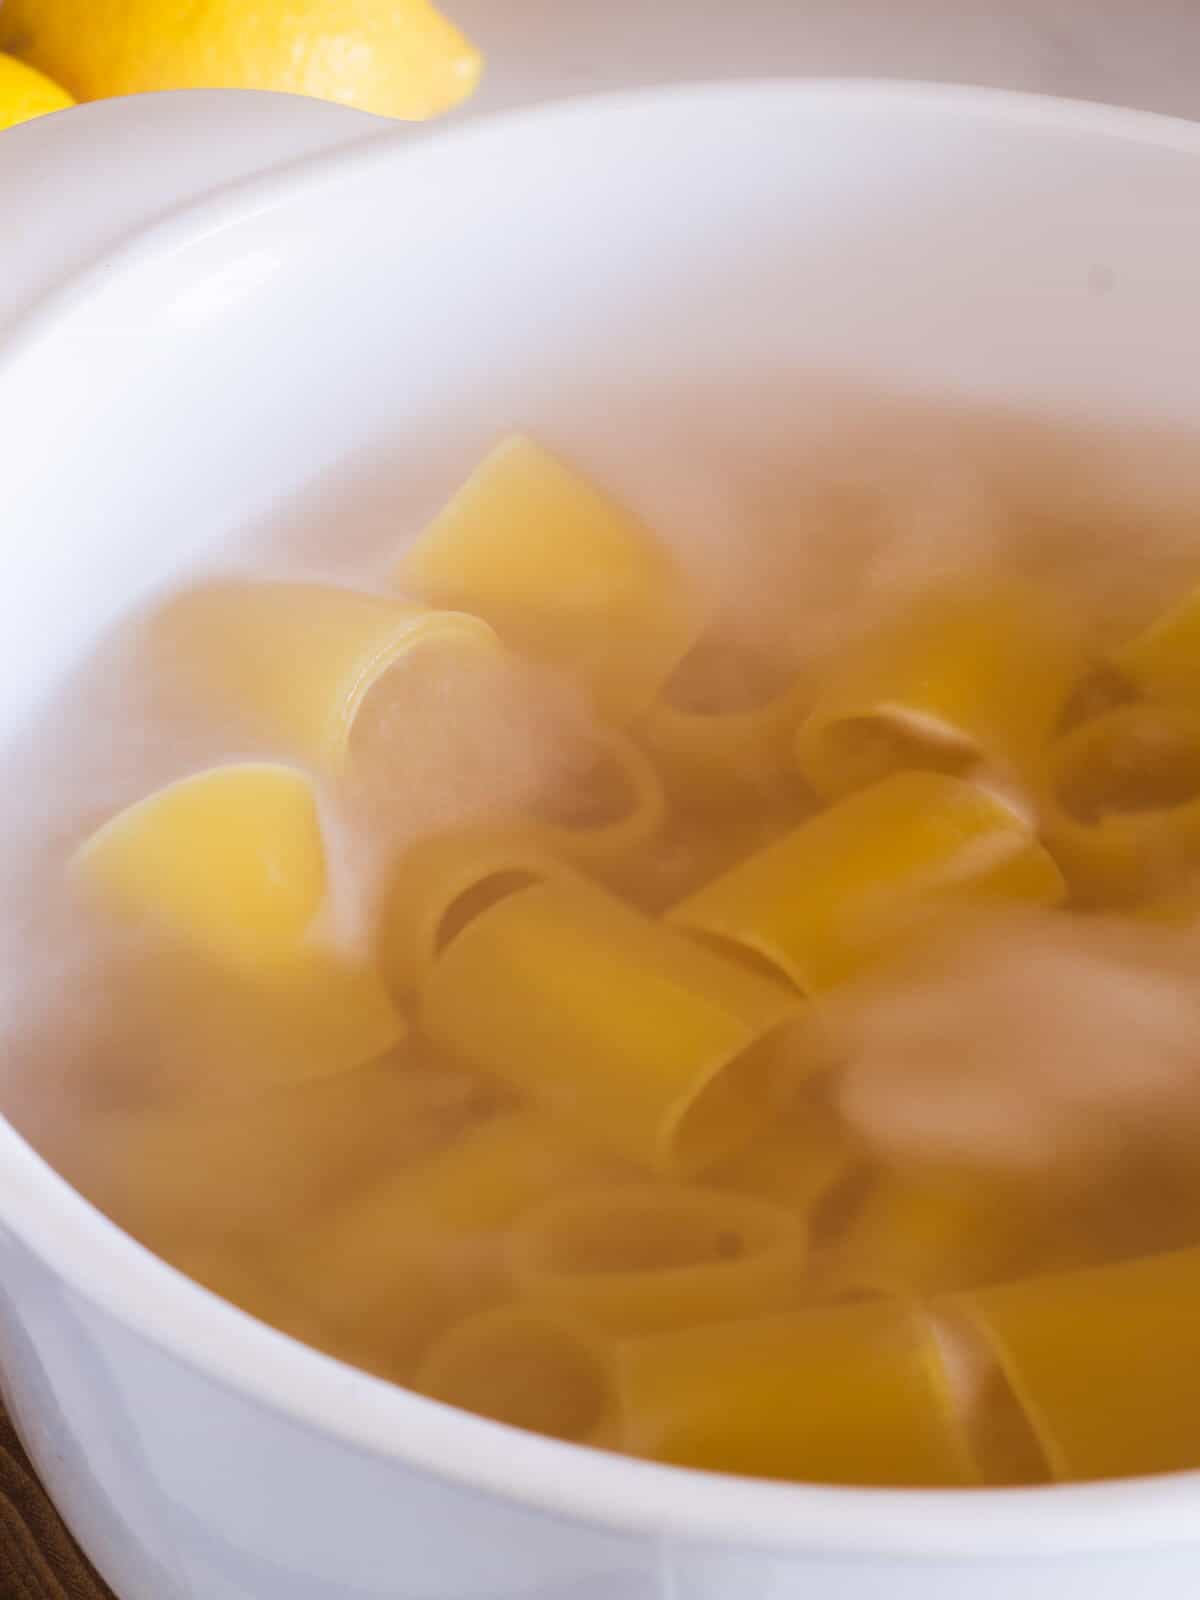 paccheri short pasta cooking in boiling water